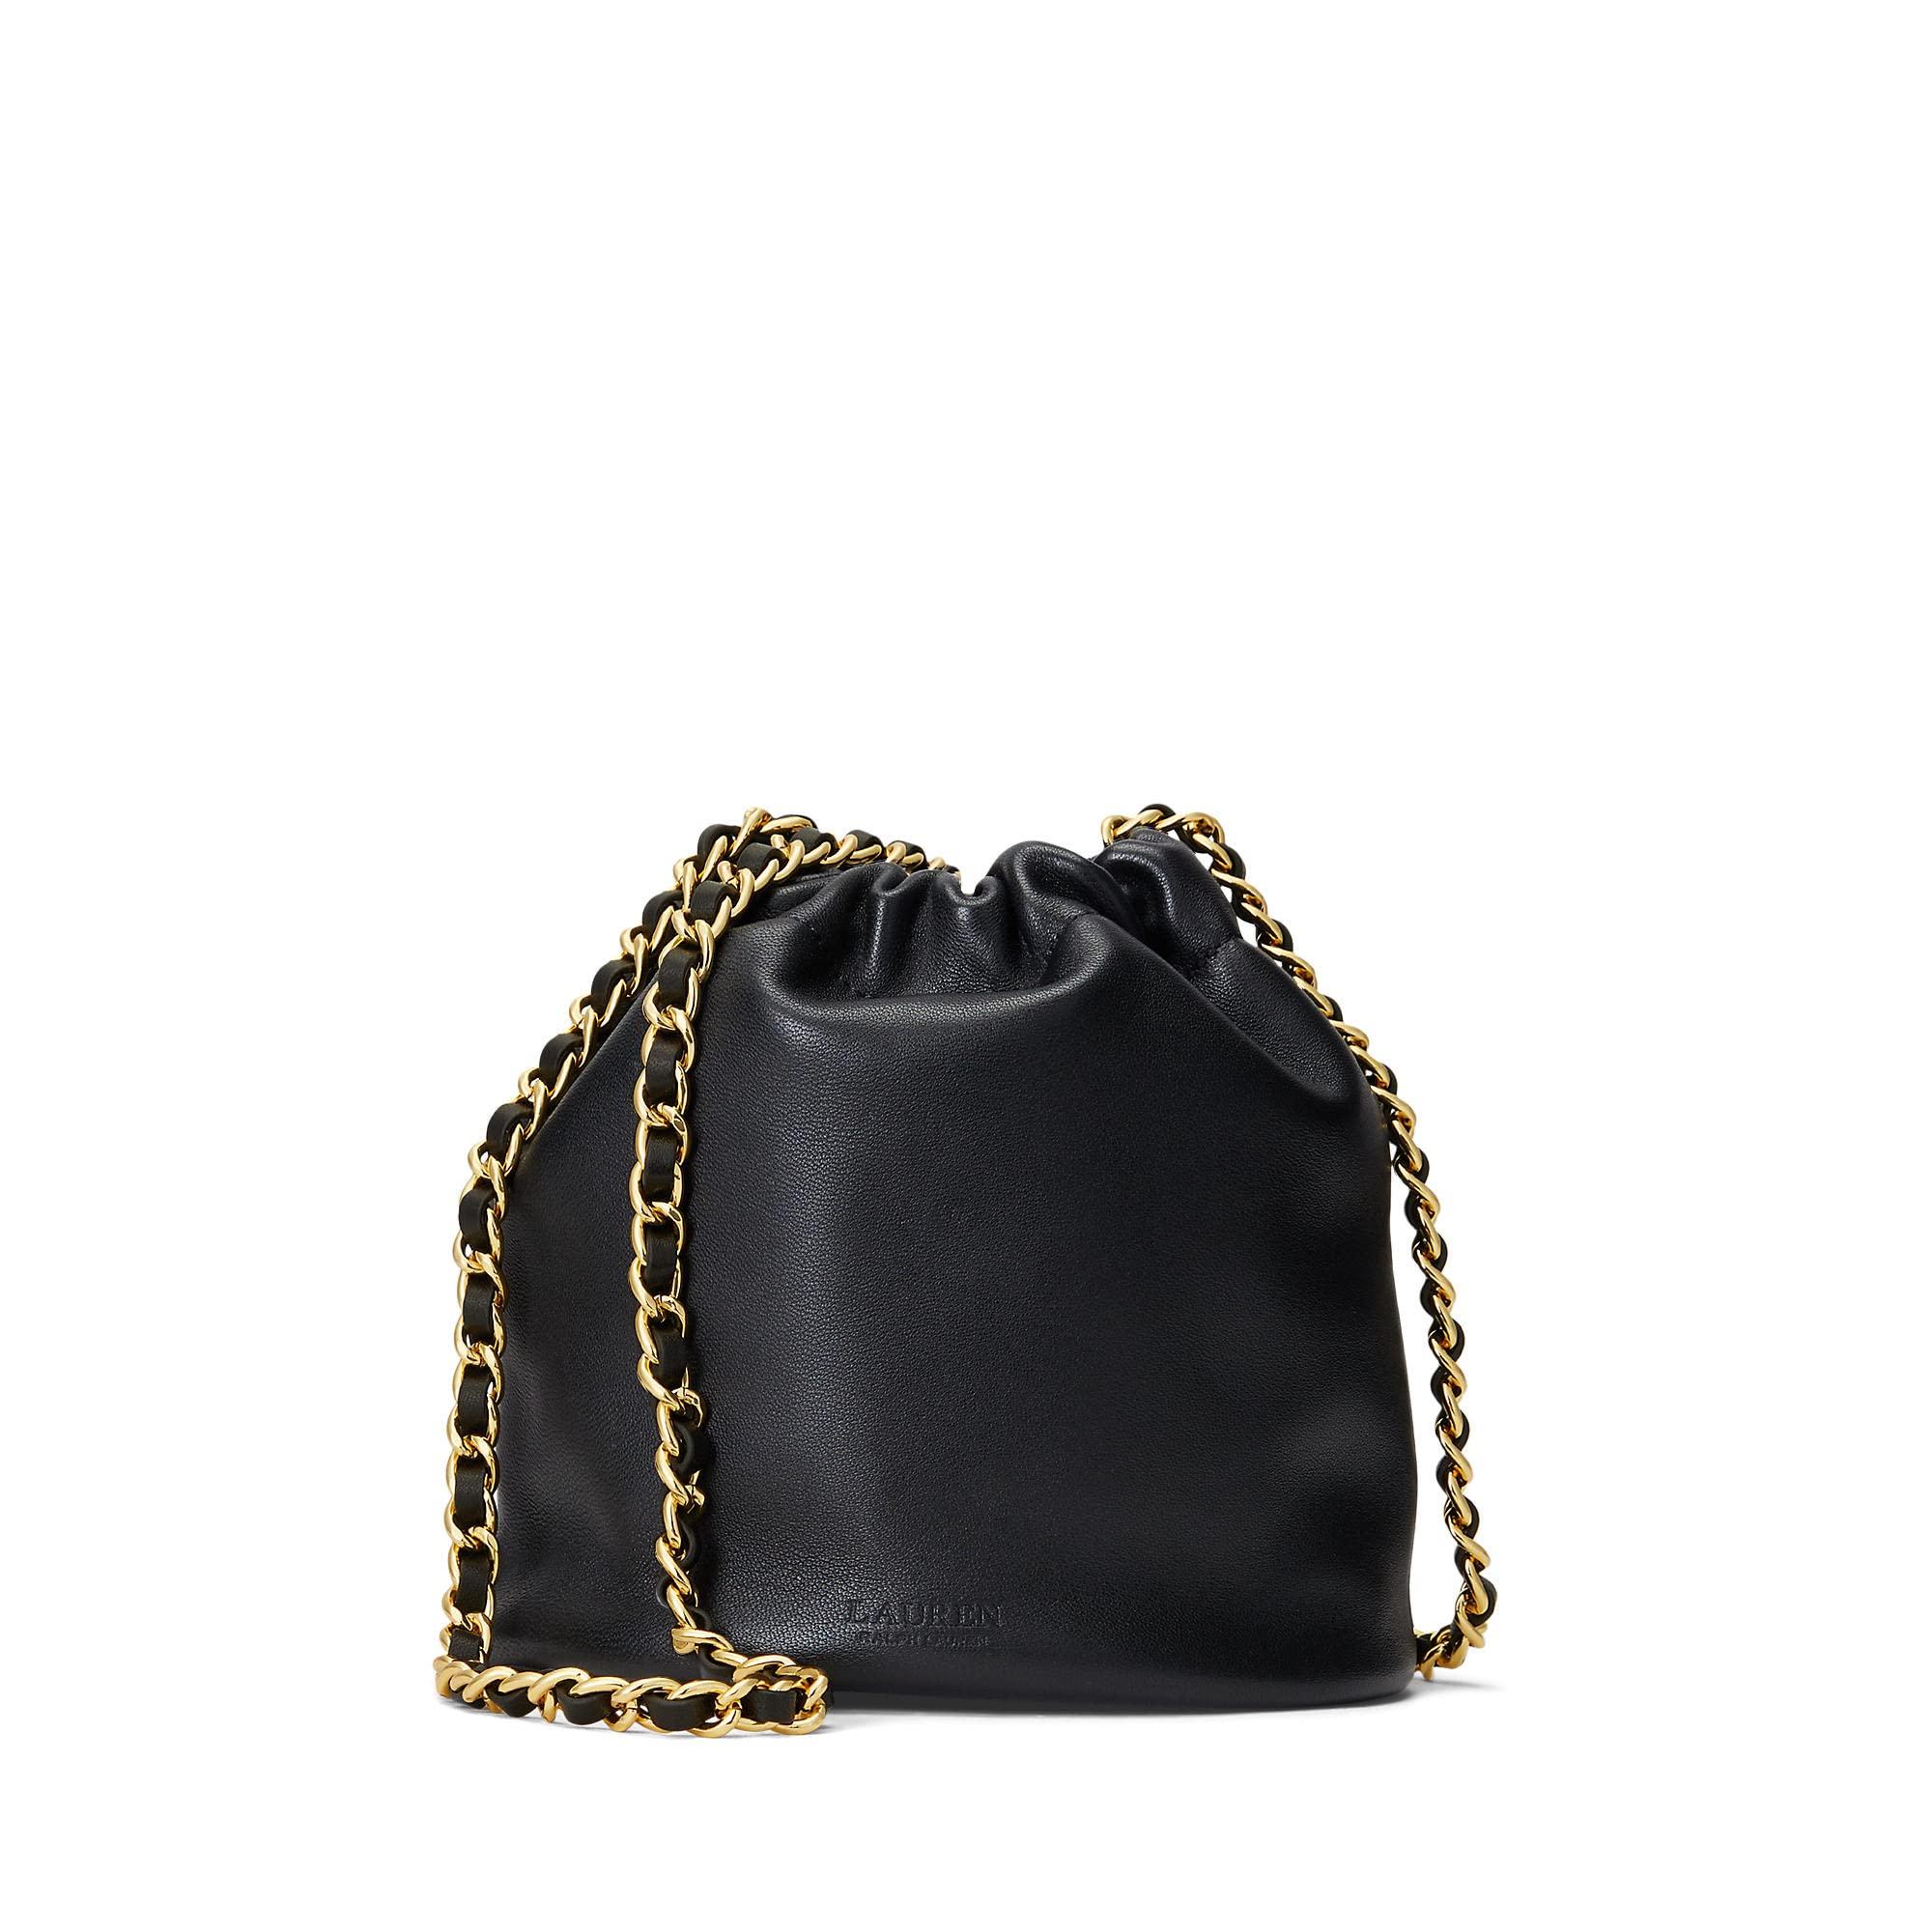 Lauren by Ralph Lauren Nappa Leather Medium Emmy Bucket Bag in Black | Lyst